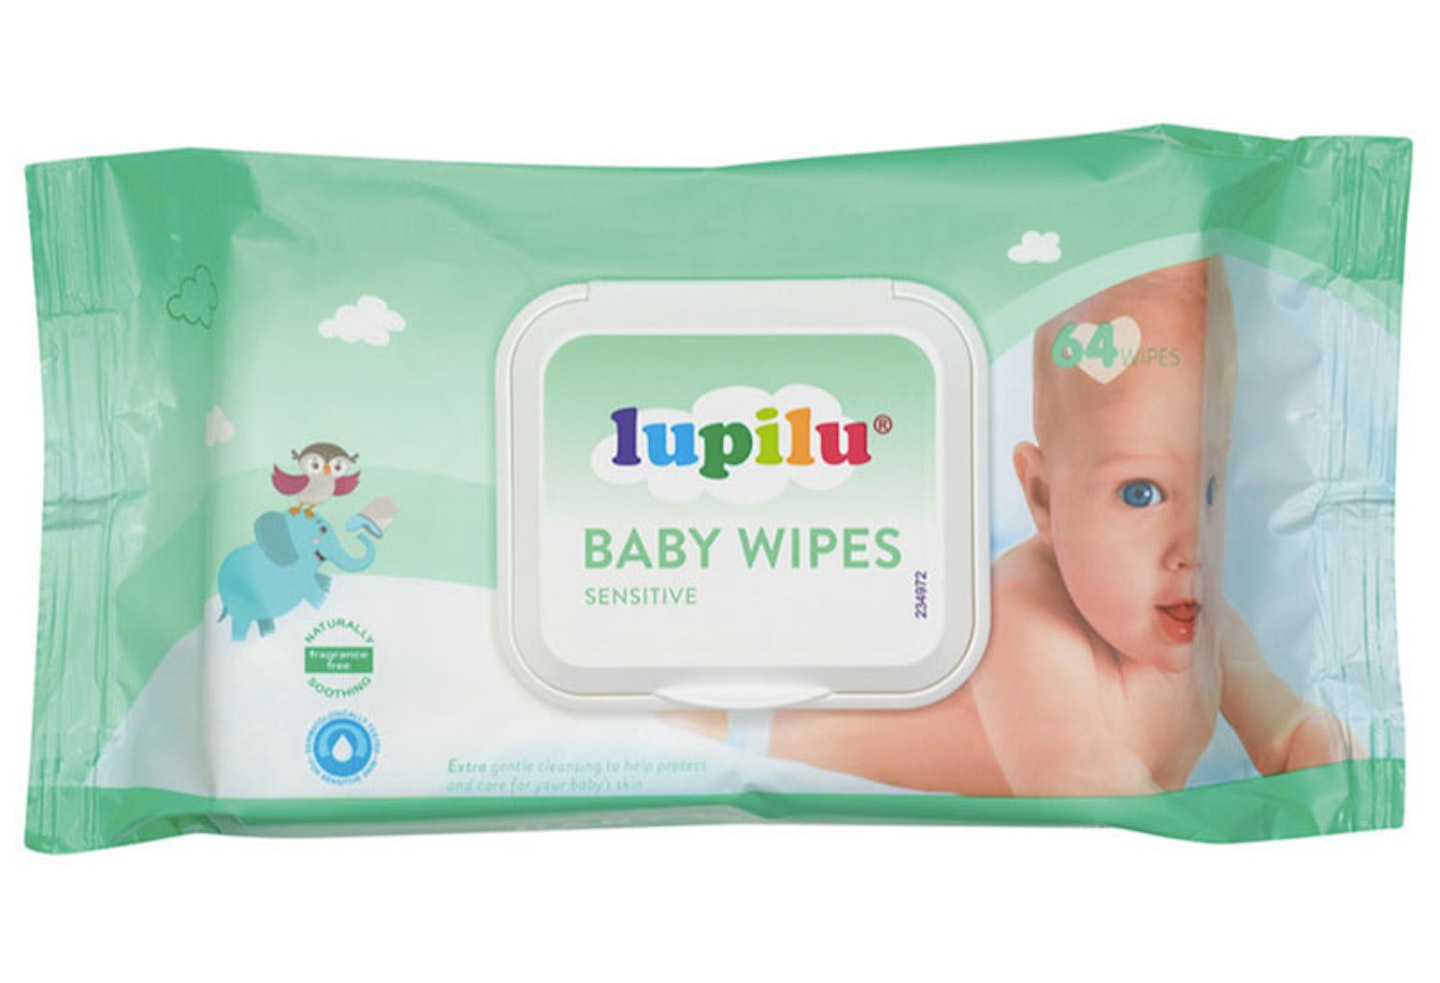 Lupilu Sensitive Baby Wipes